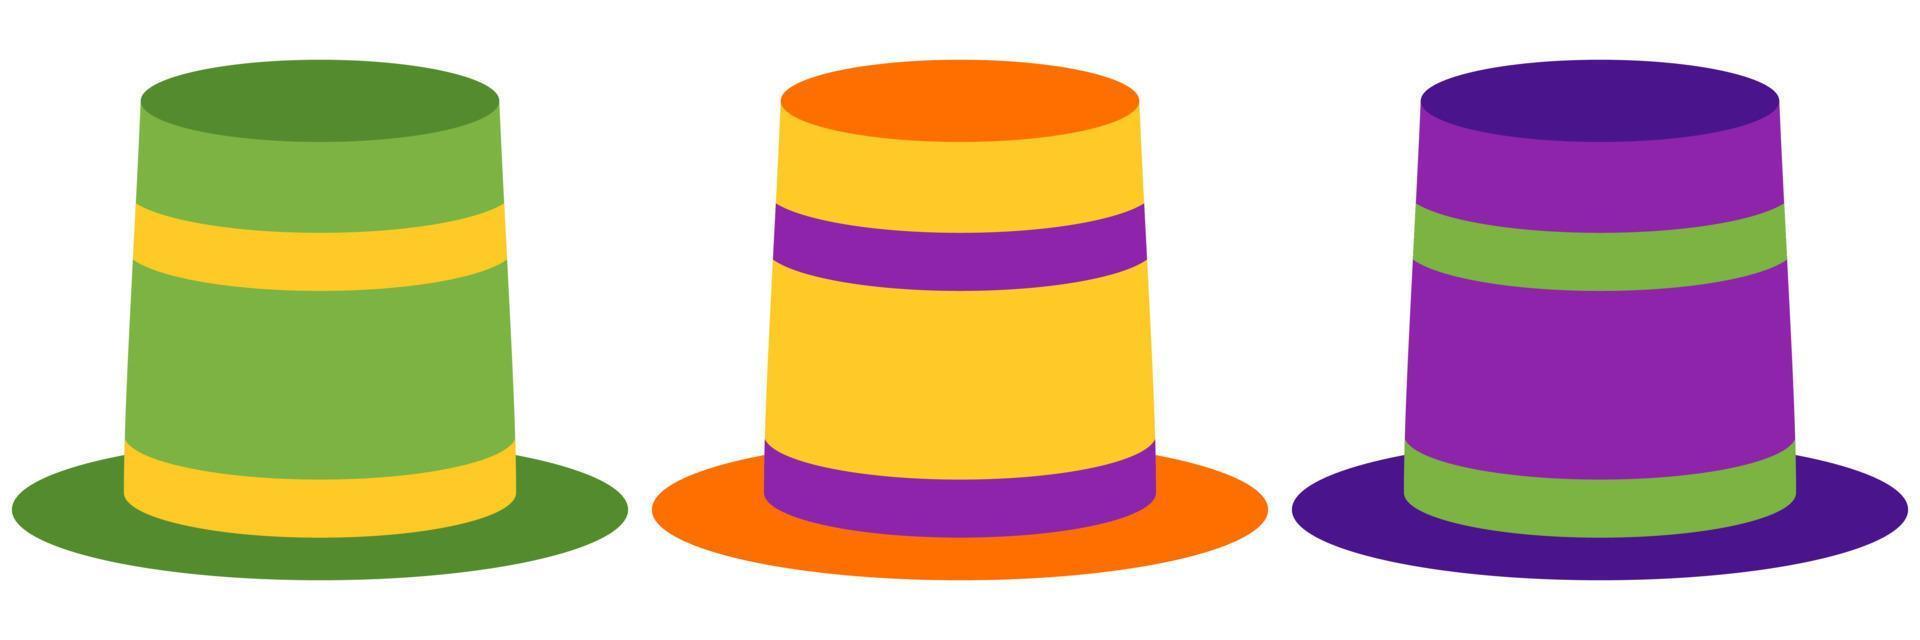 chapéu de carnaval em estilo simples isolado vetor